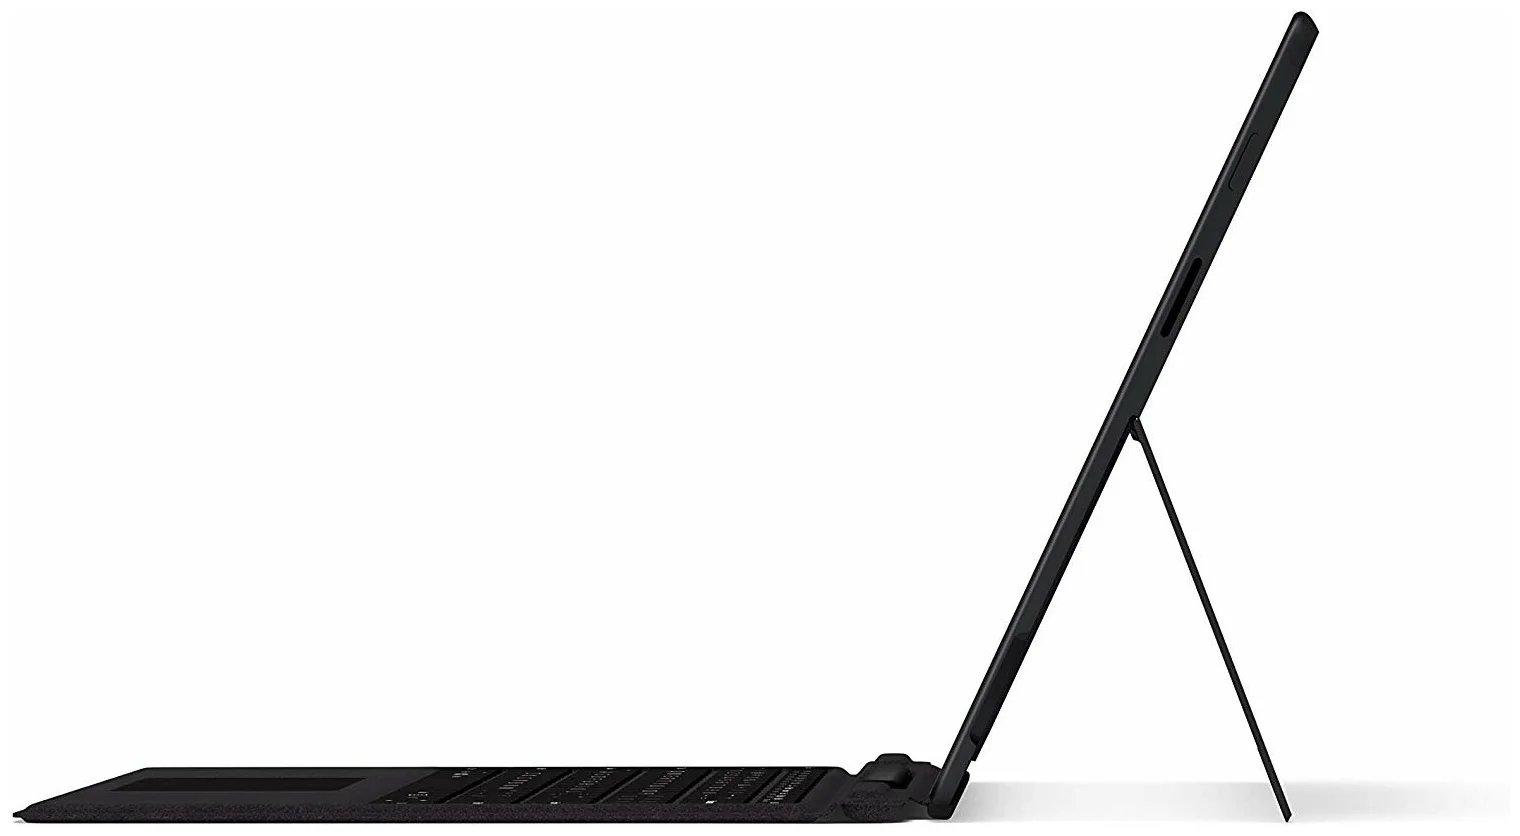 Microsoft Surface Pro X MSQ1 8Gb 128Gb (2019) - камеры: основная 10 МП, фронтальная 5 МП